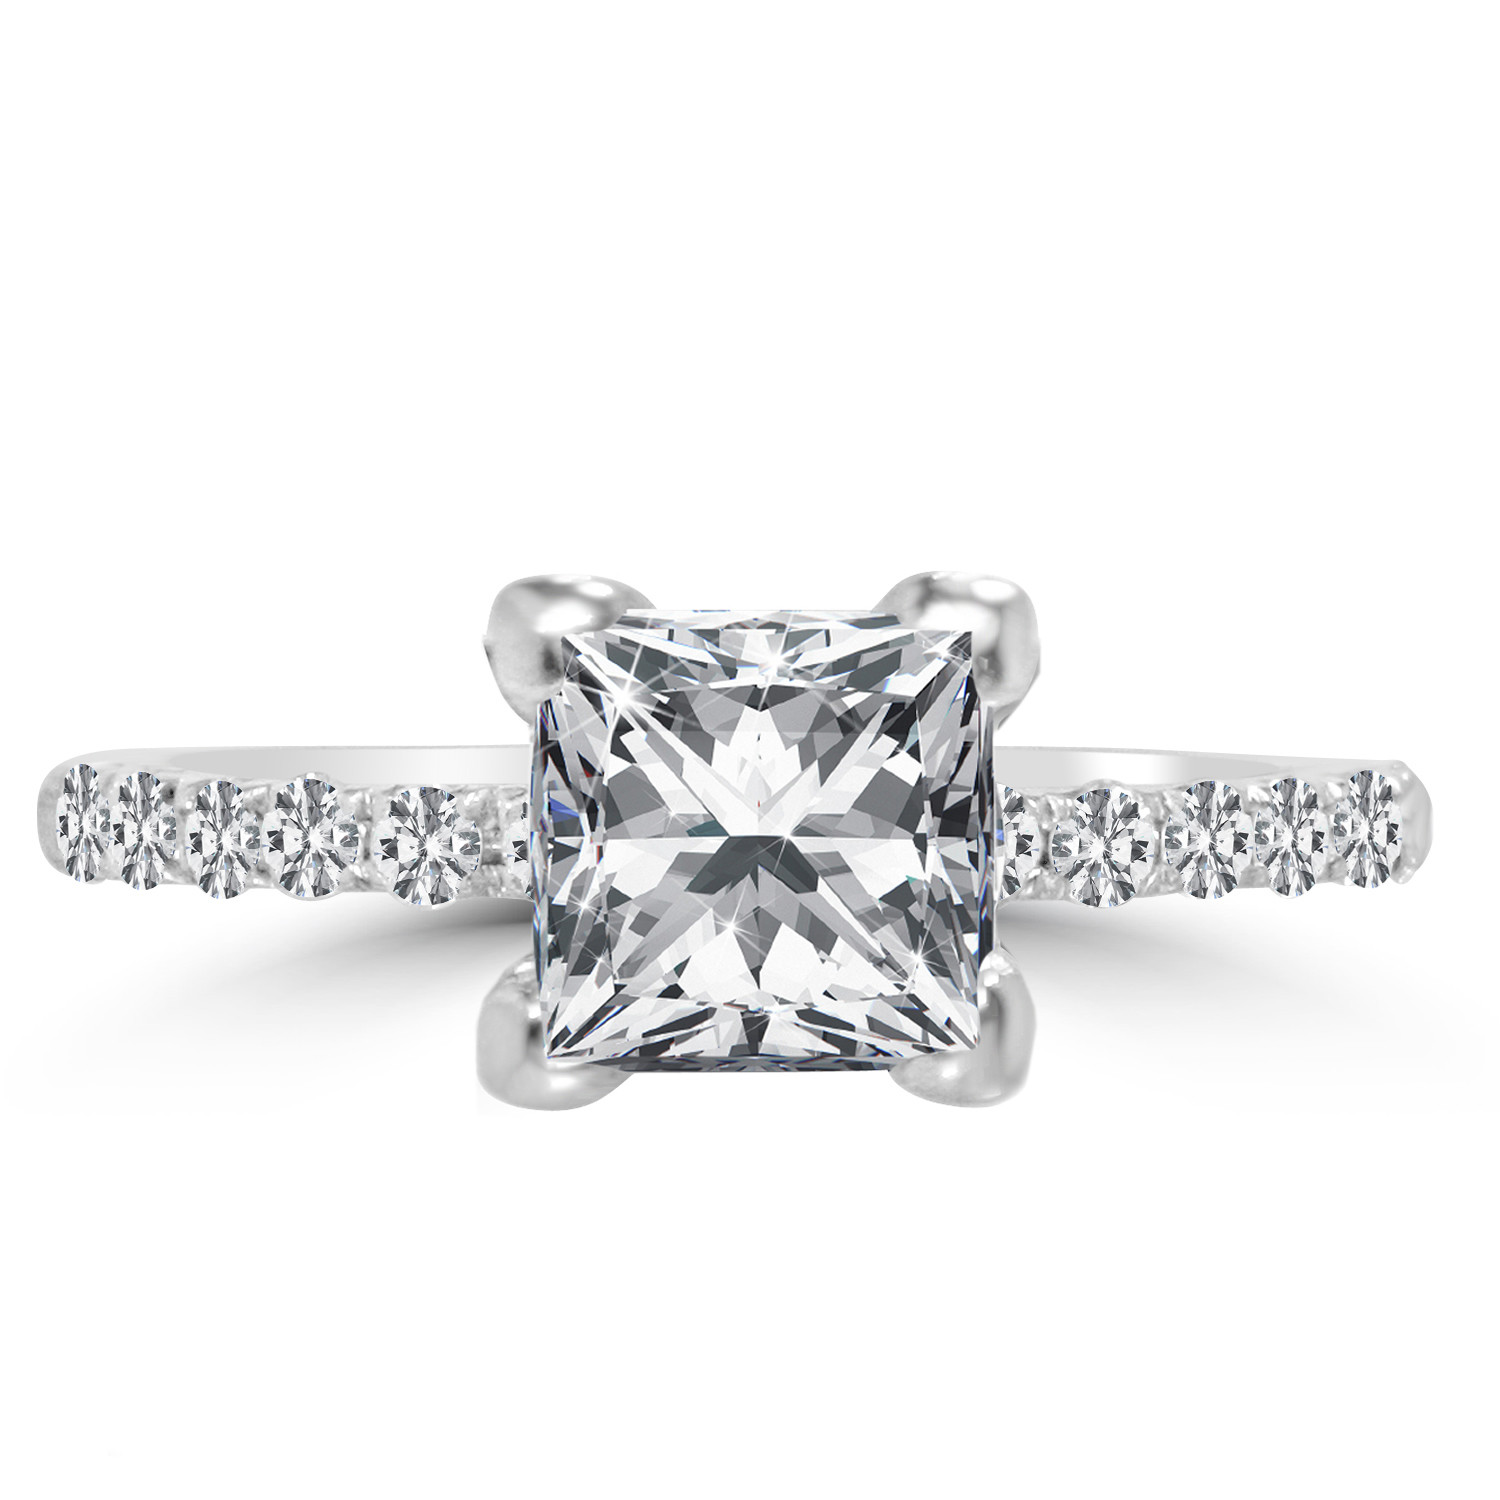 2 Ct Princess Cut Engagement Rings
 1 2 Ct Princess Cut Diamond Engagement Ring VS2 F 14K